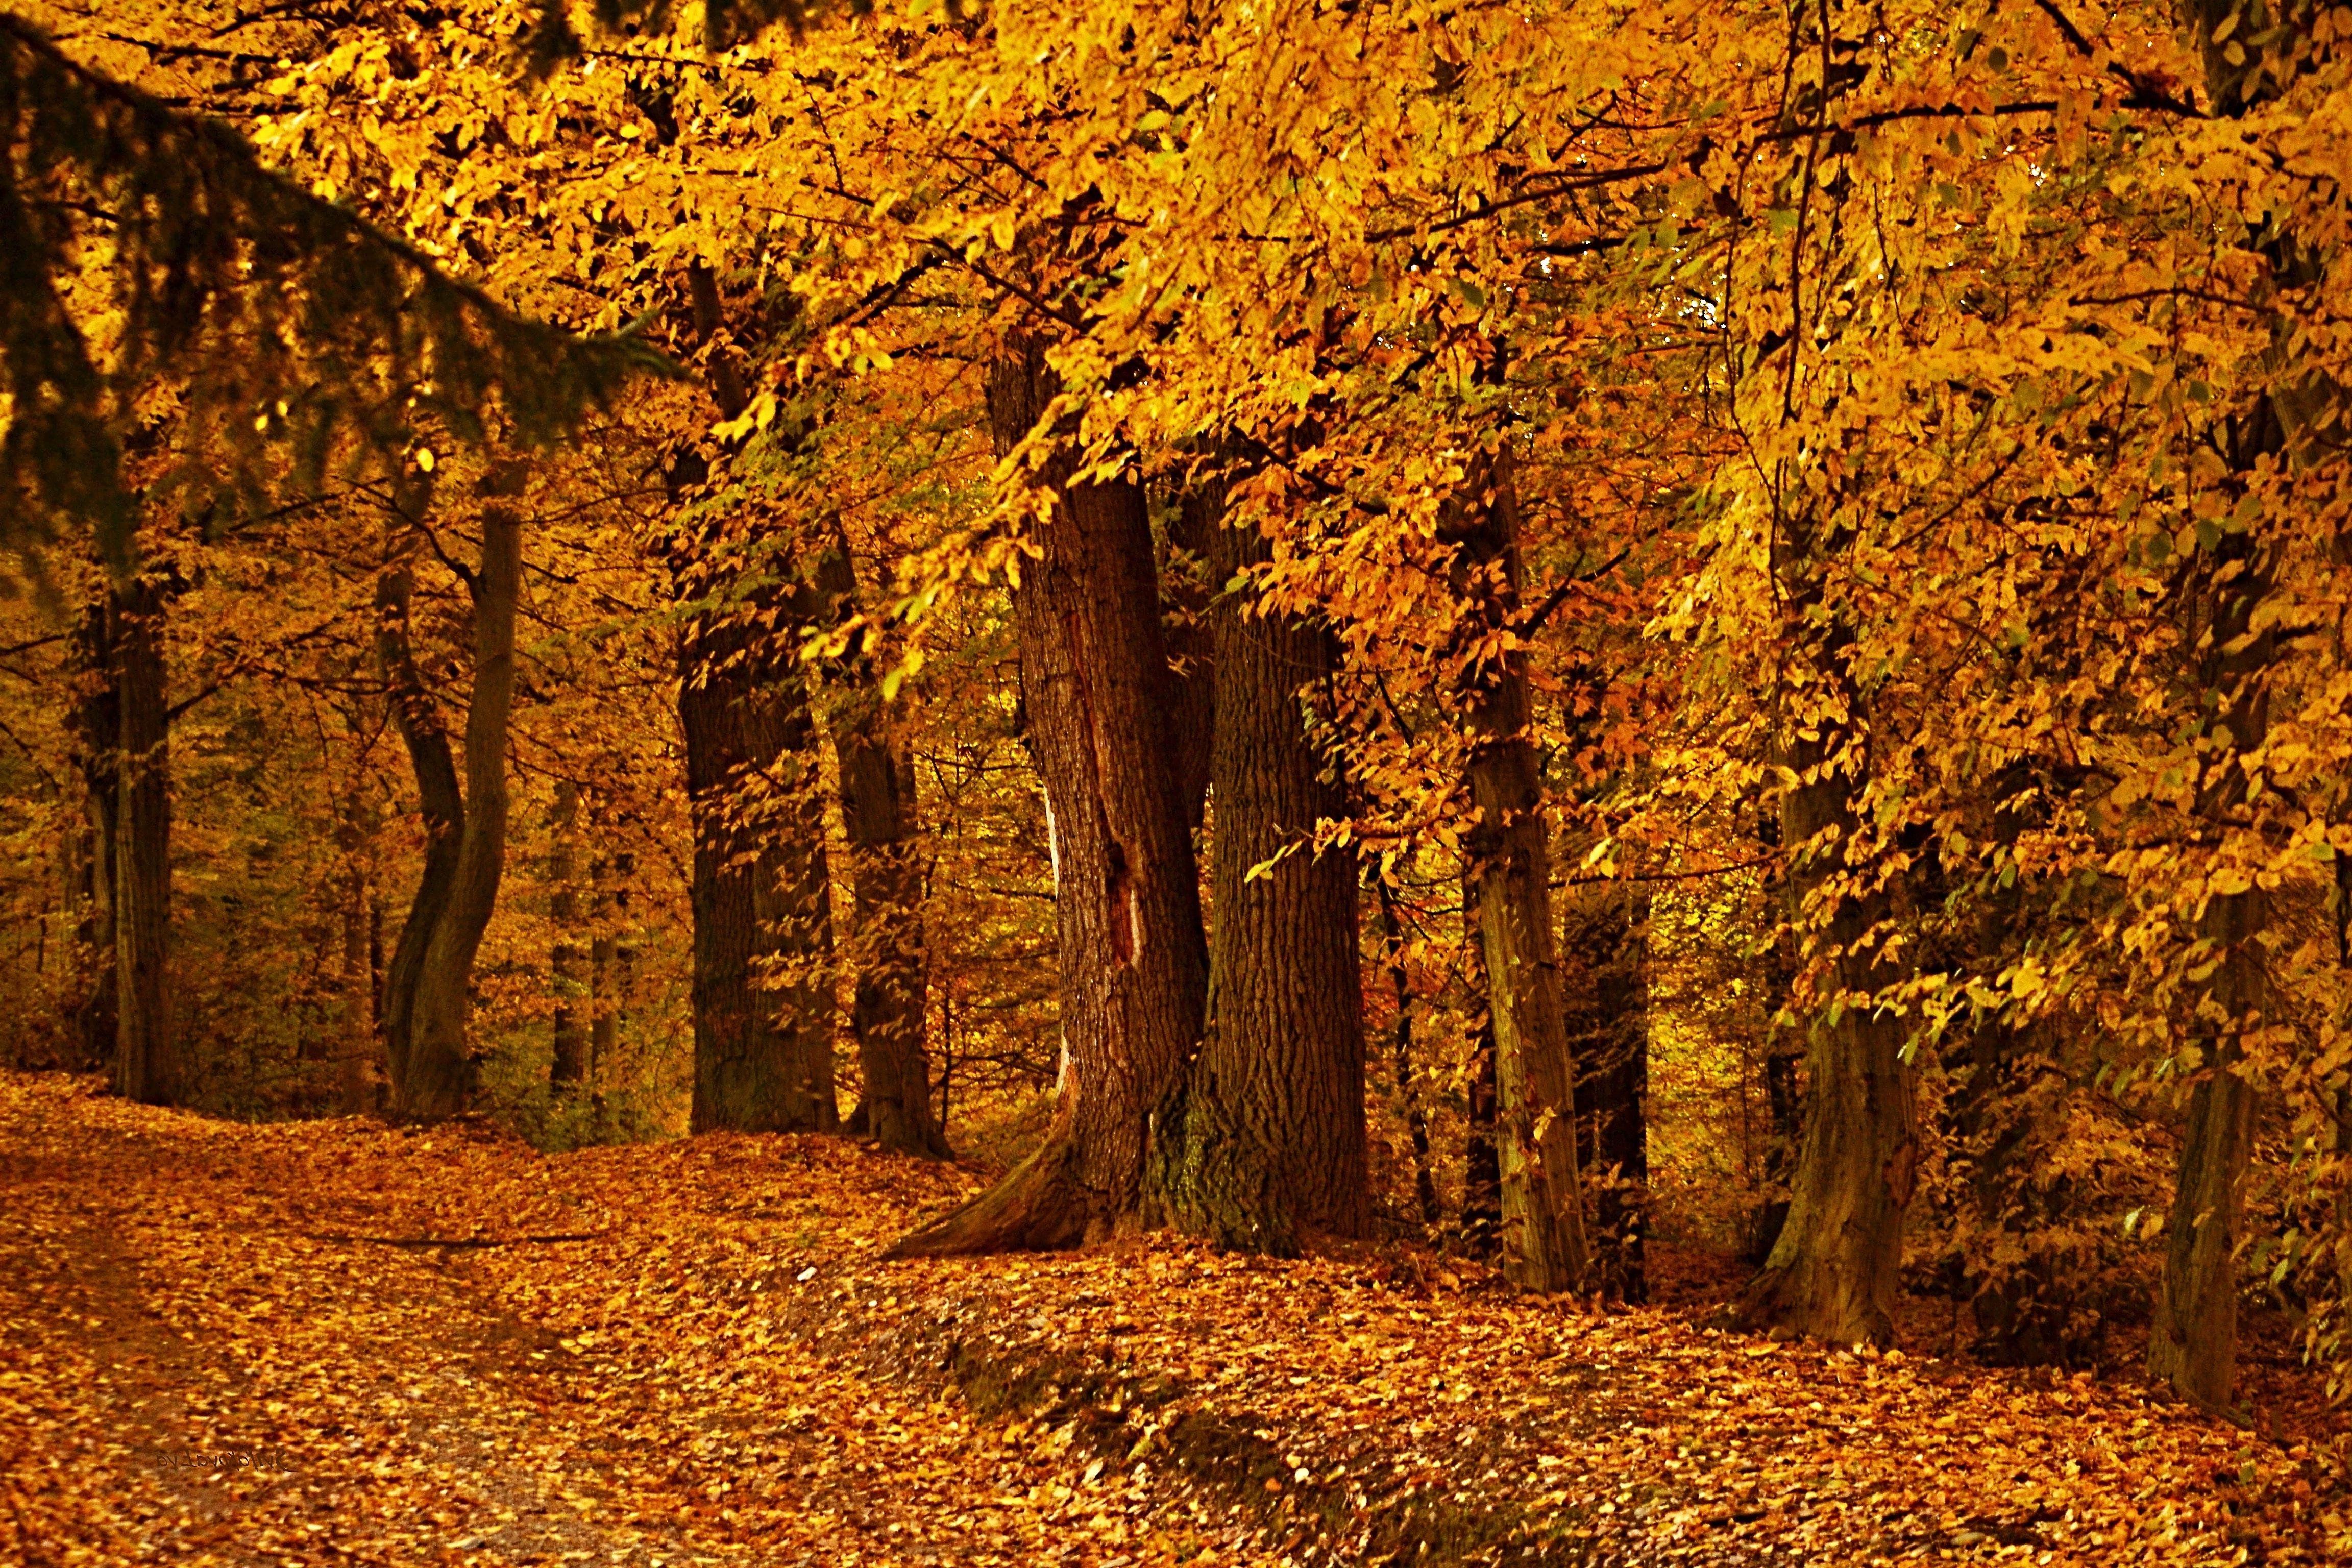 Rustic Autumn Scenery Wallpaper